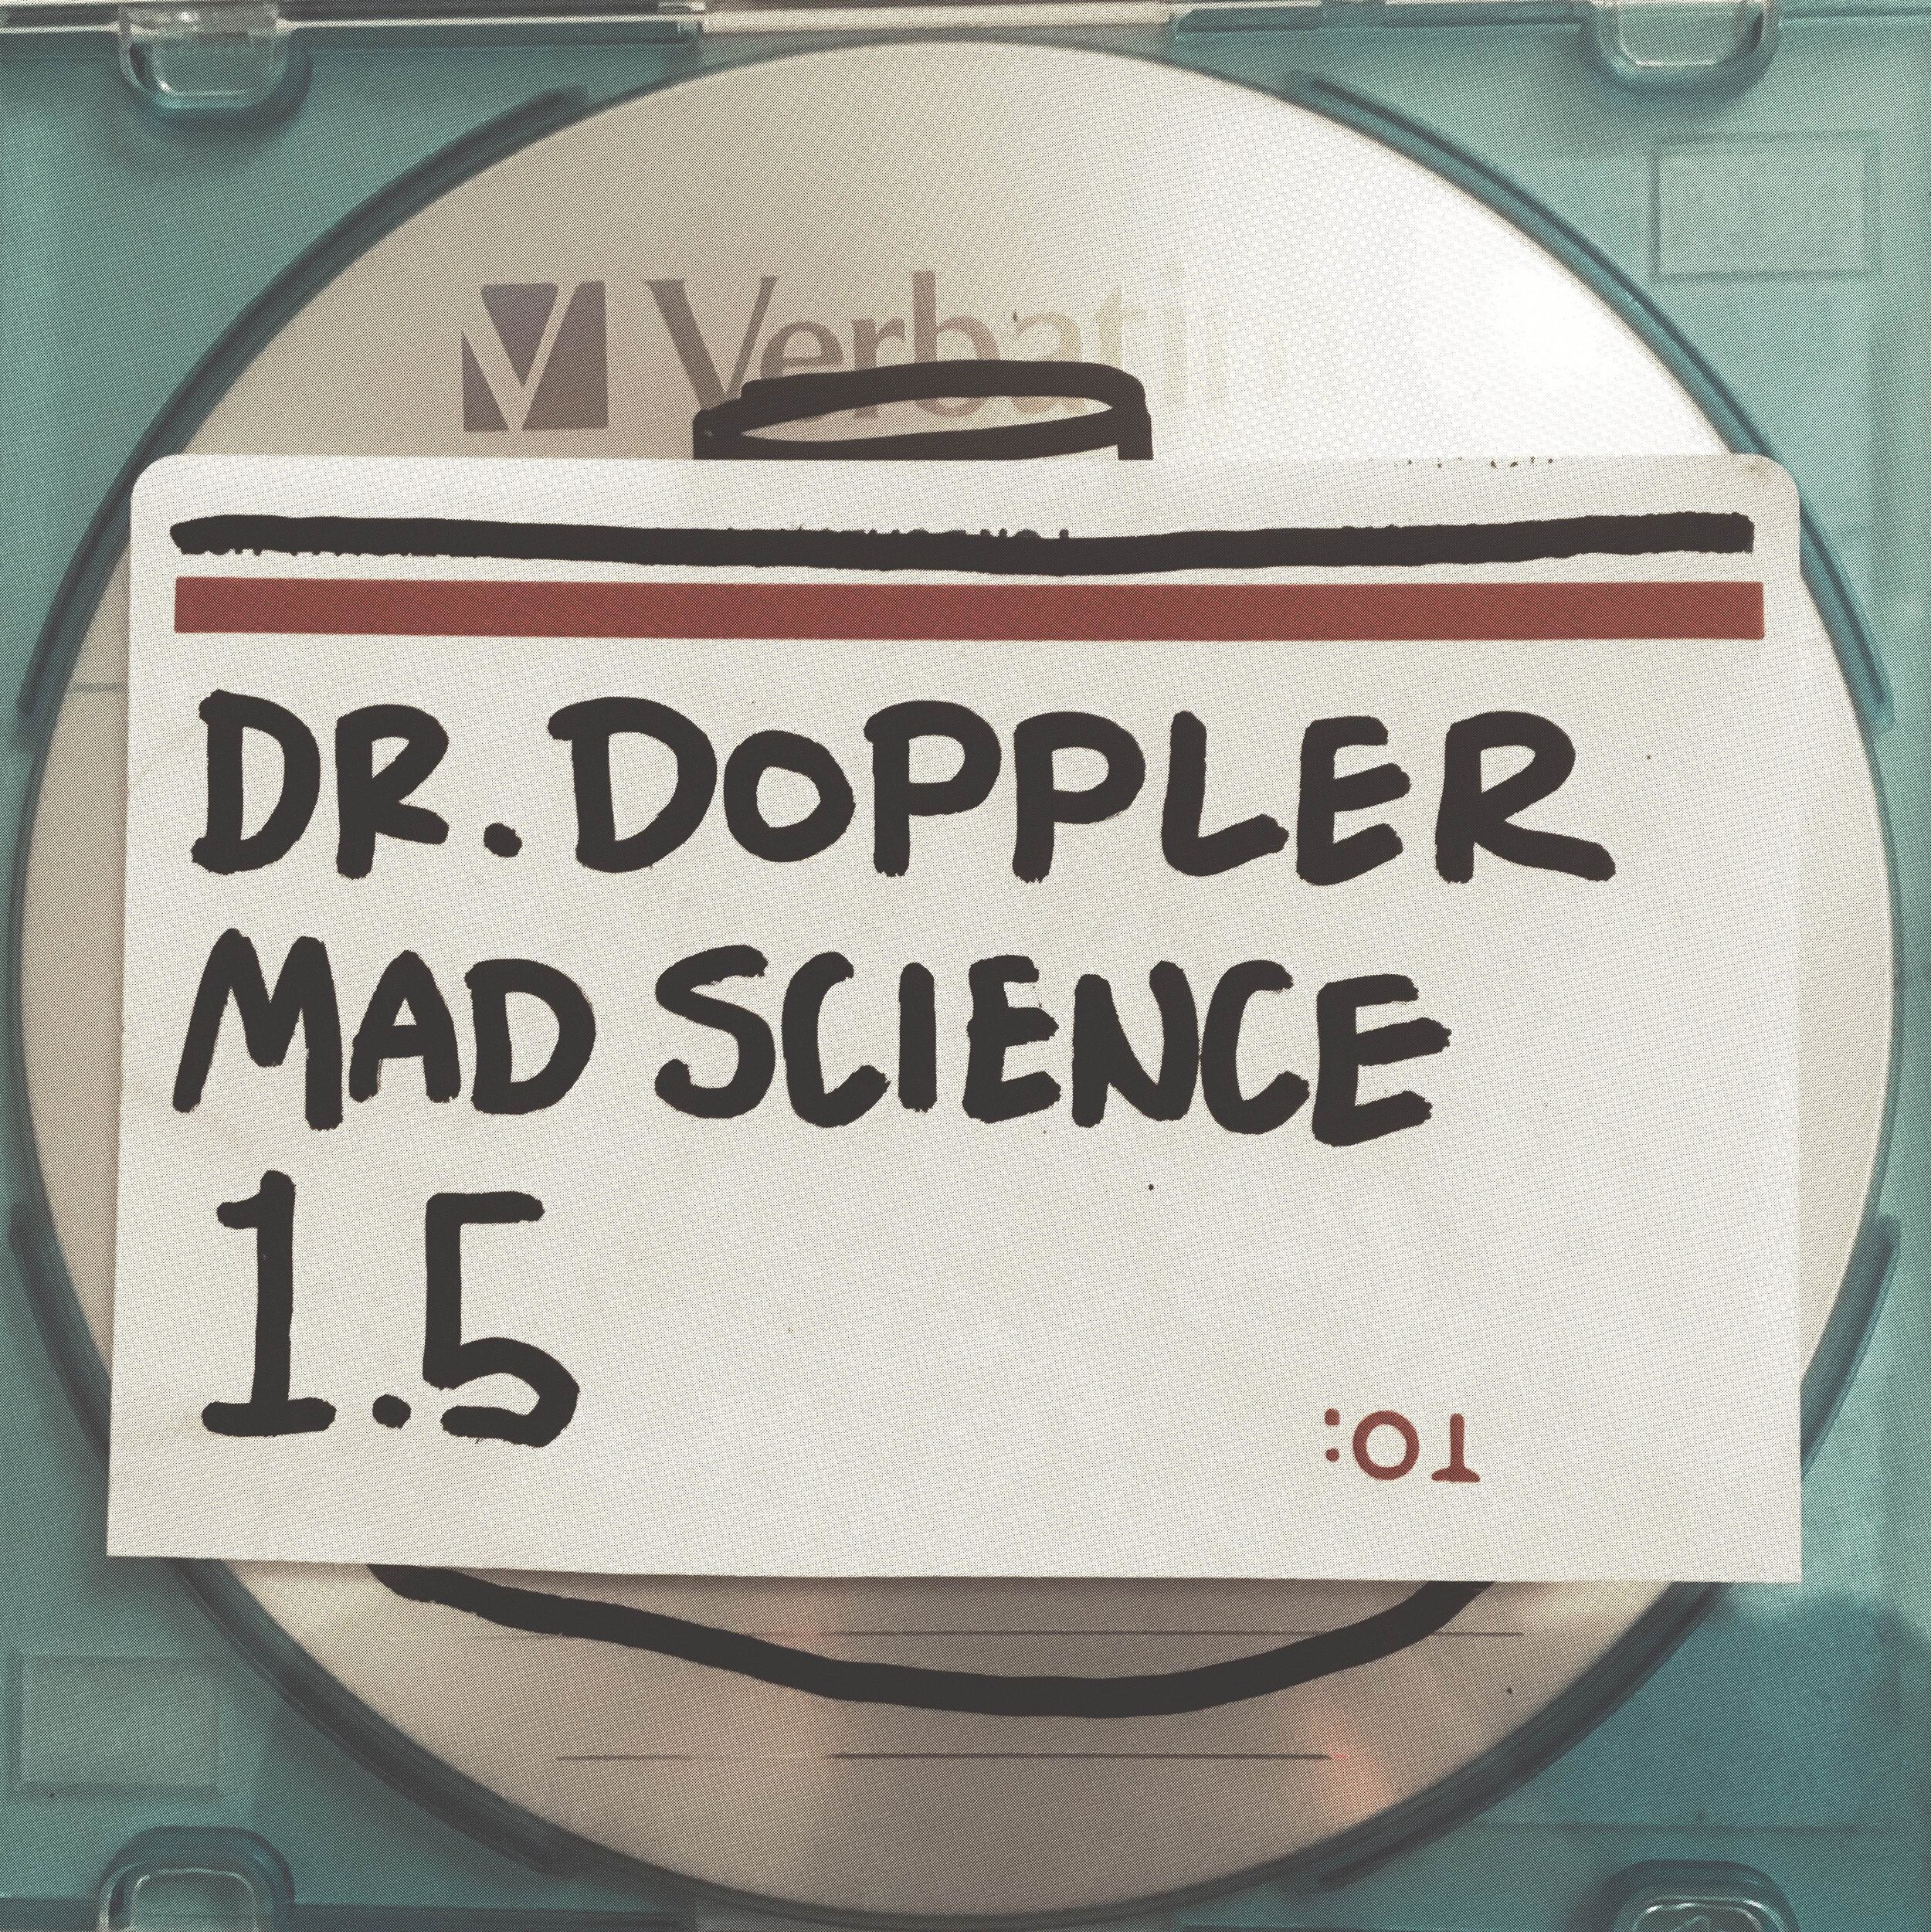 Mad Science - Dr. Doppler